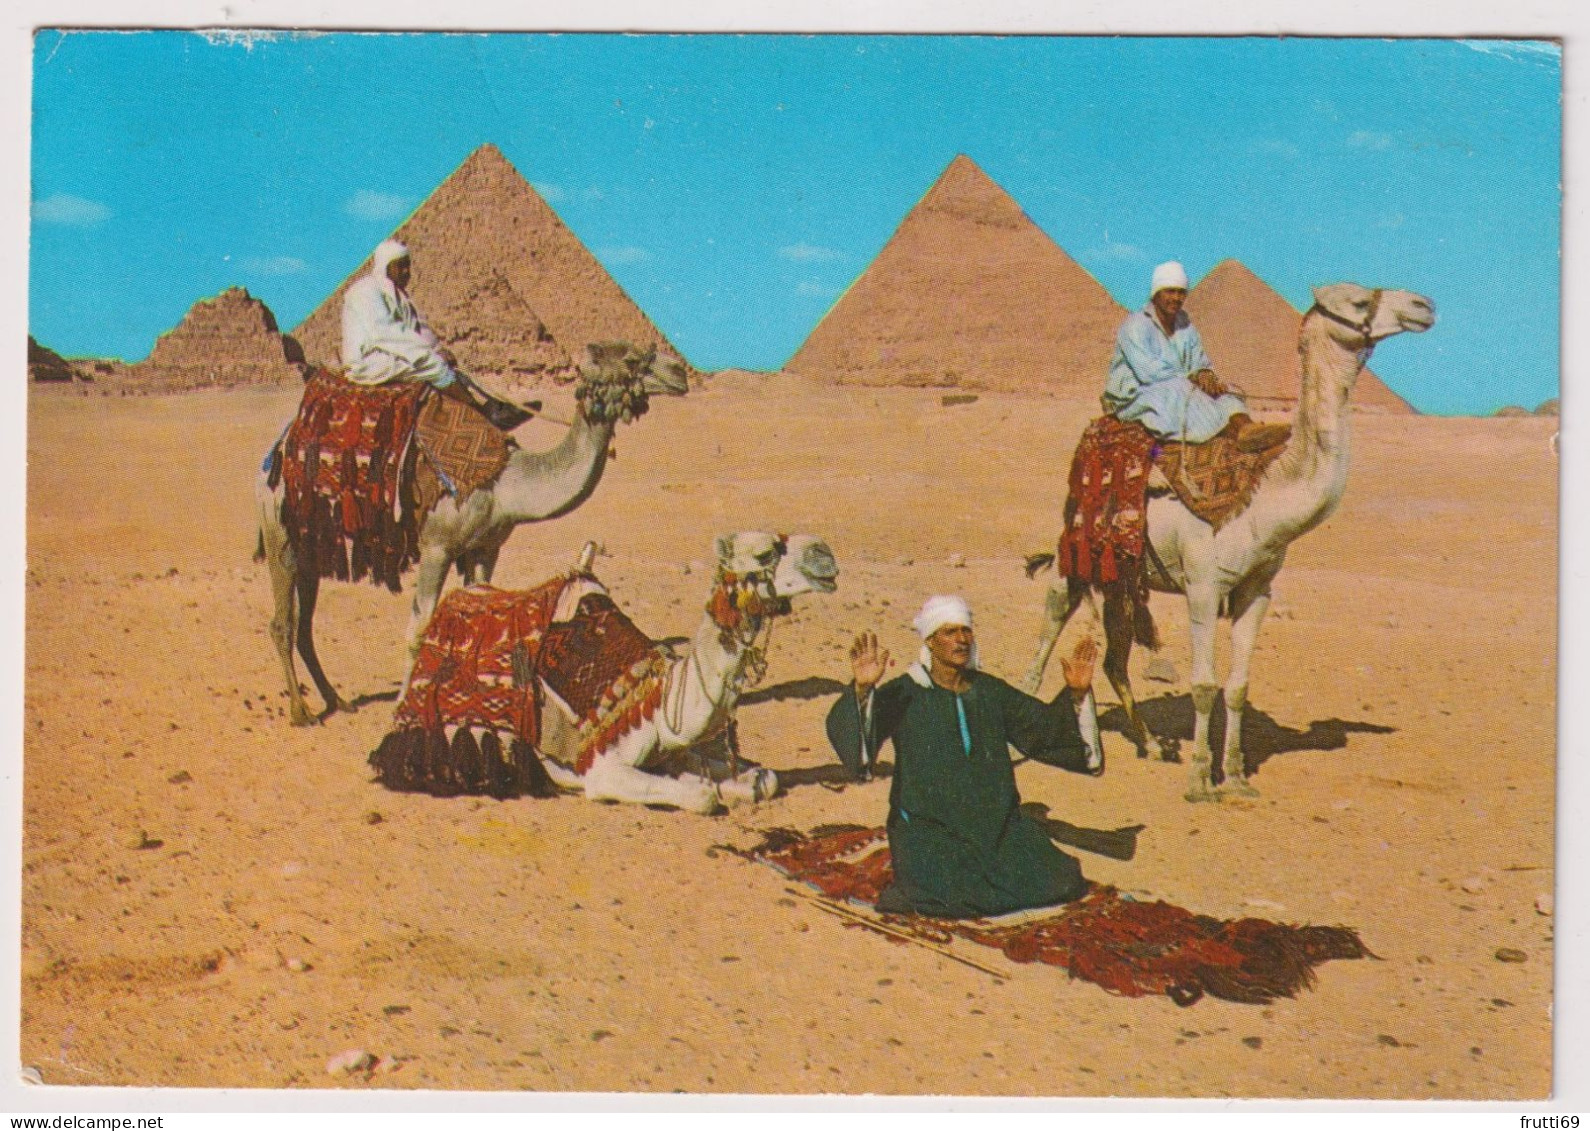 AK 198200  EGYPT - Giza - Kheops, Kephren And Mycerinos Pyramids - Pyramides